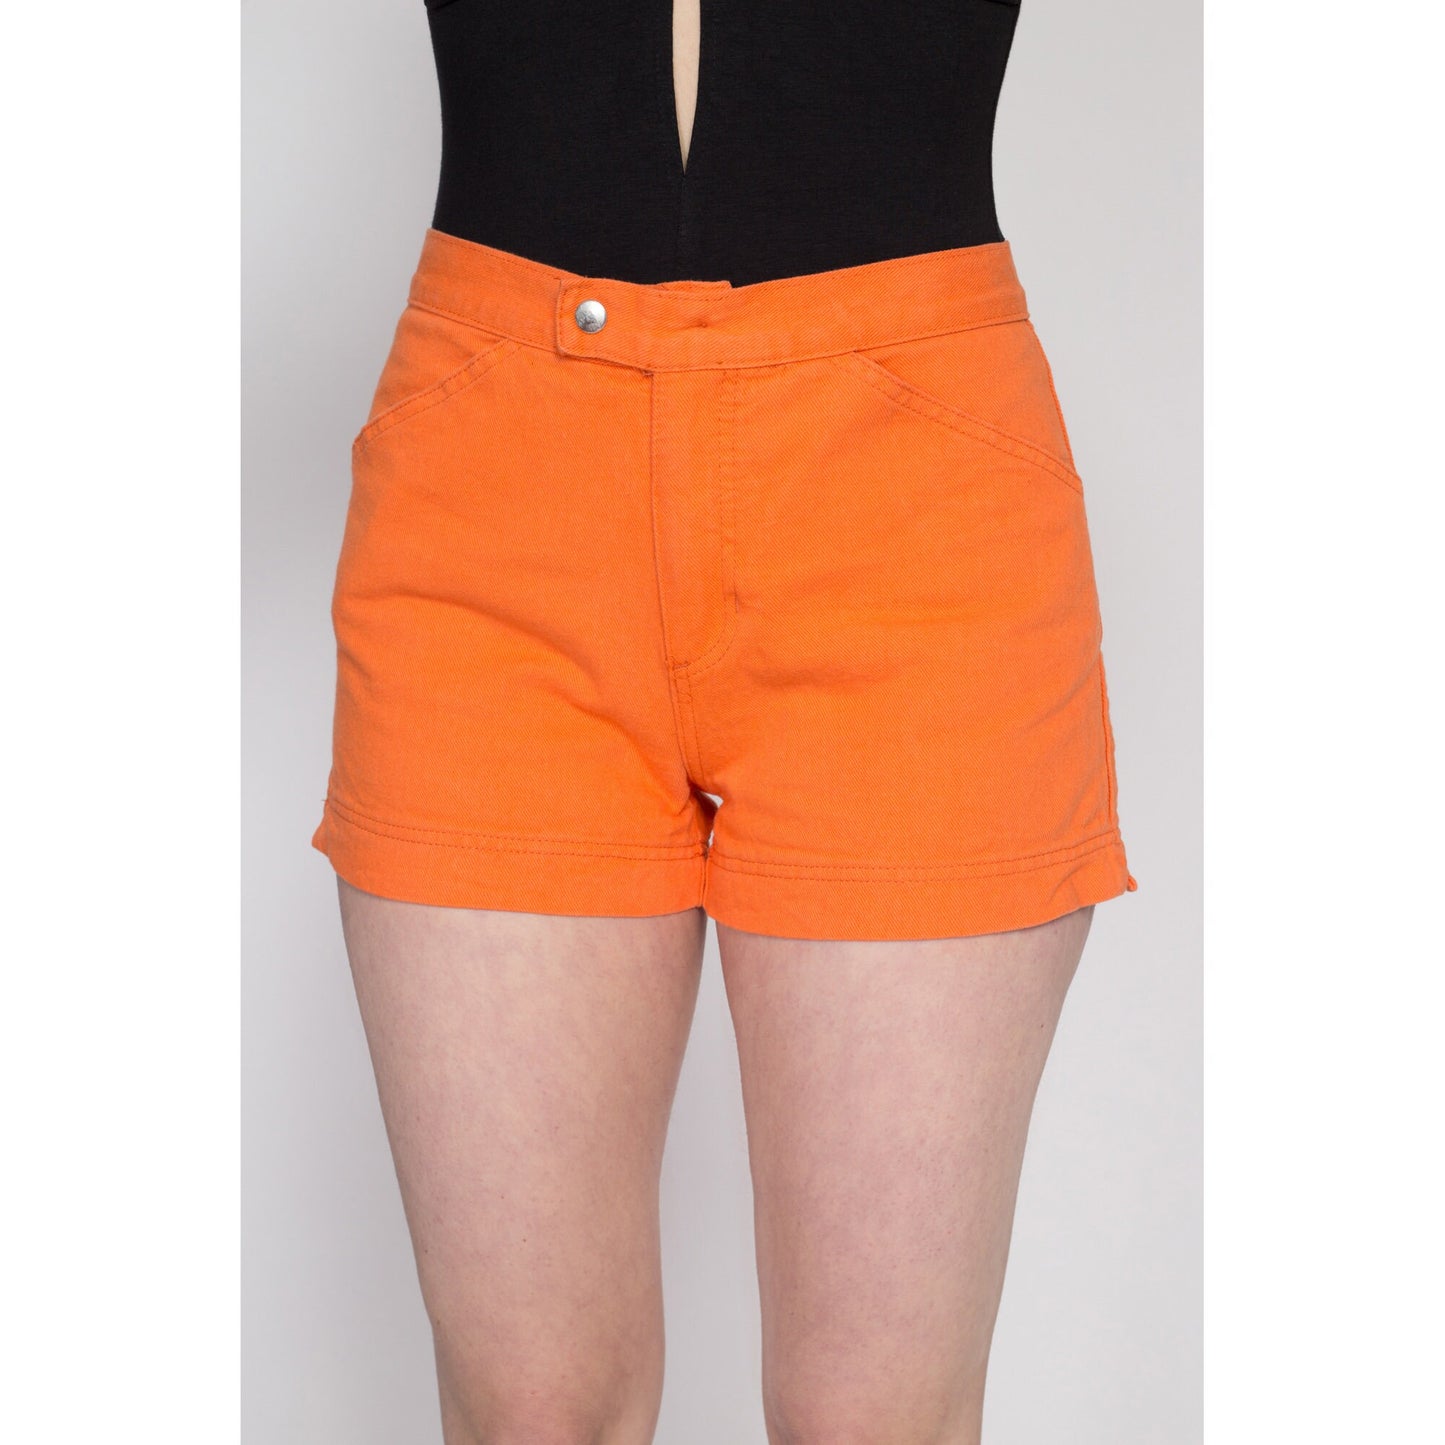 Medium 80s Orange Cheeky Jean Shorts | Vintage Be Bop Mid Rise Denim Booty Shorts